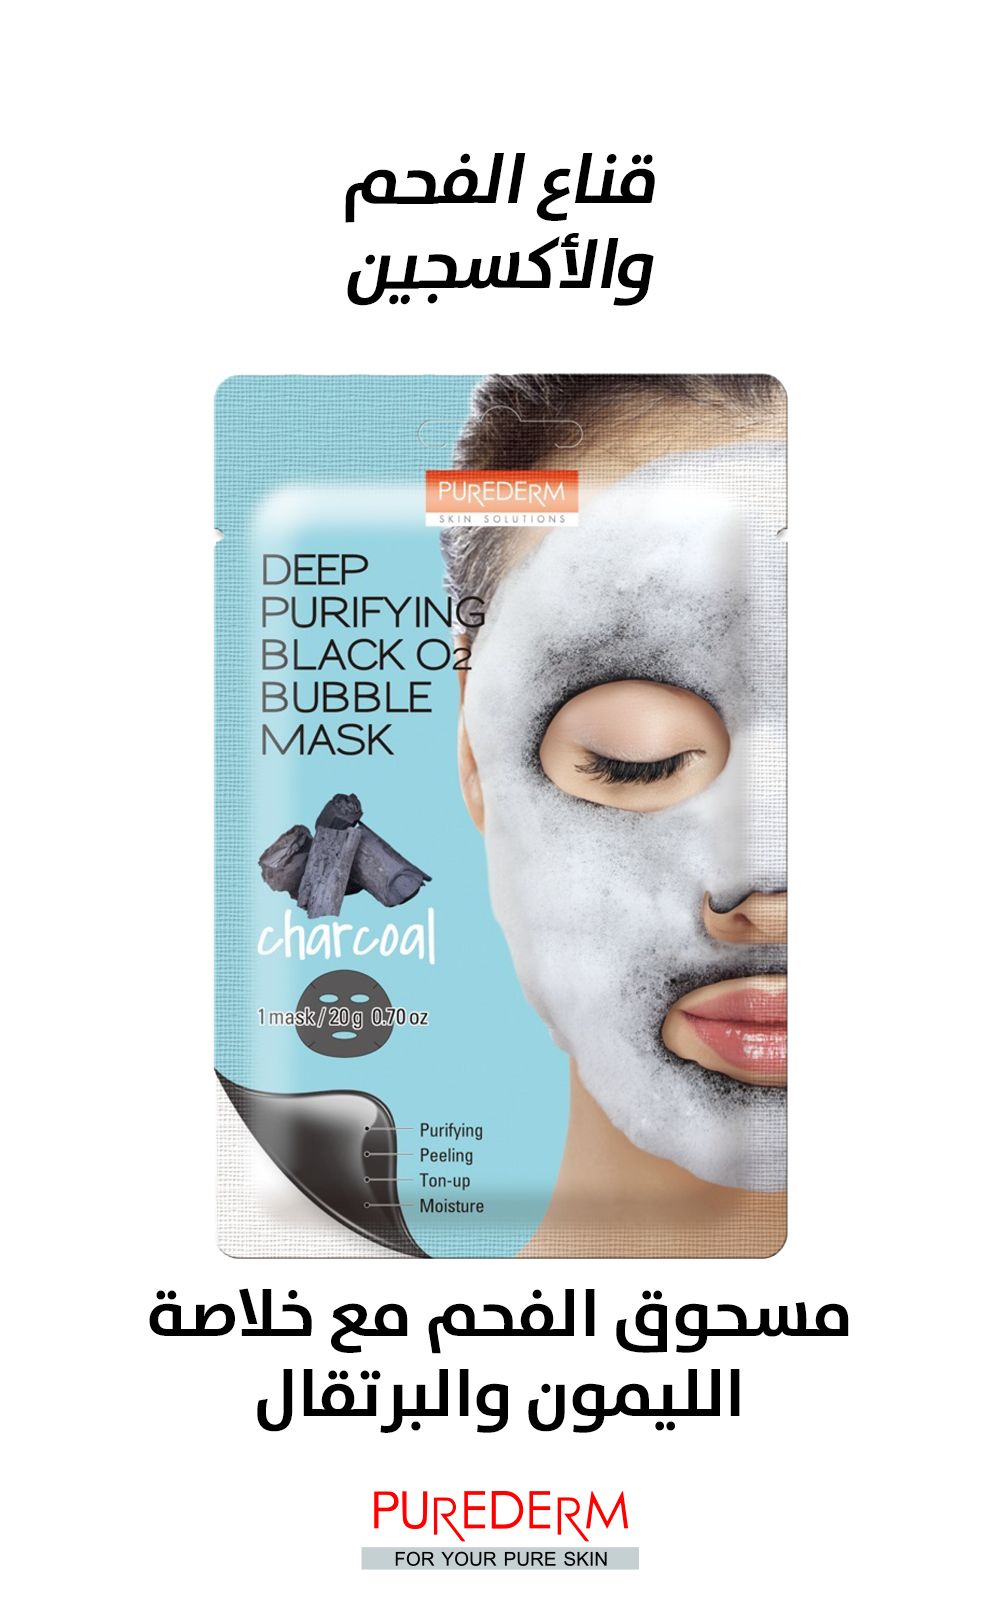 Purederm deep purifying black o2 bubble mask charcool